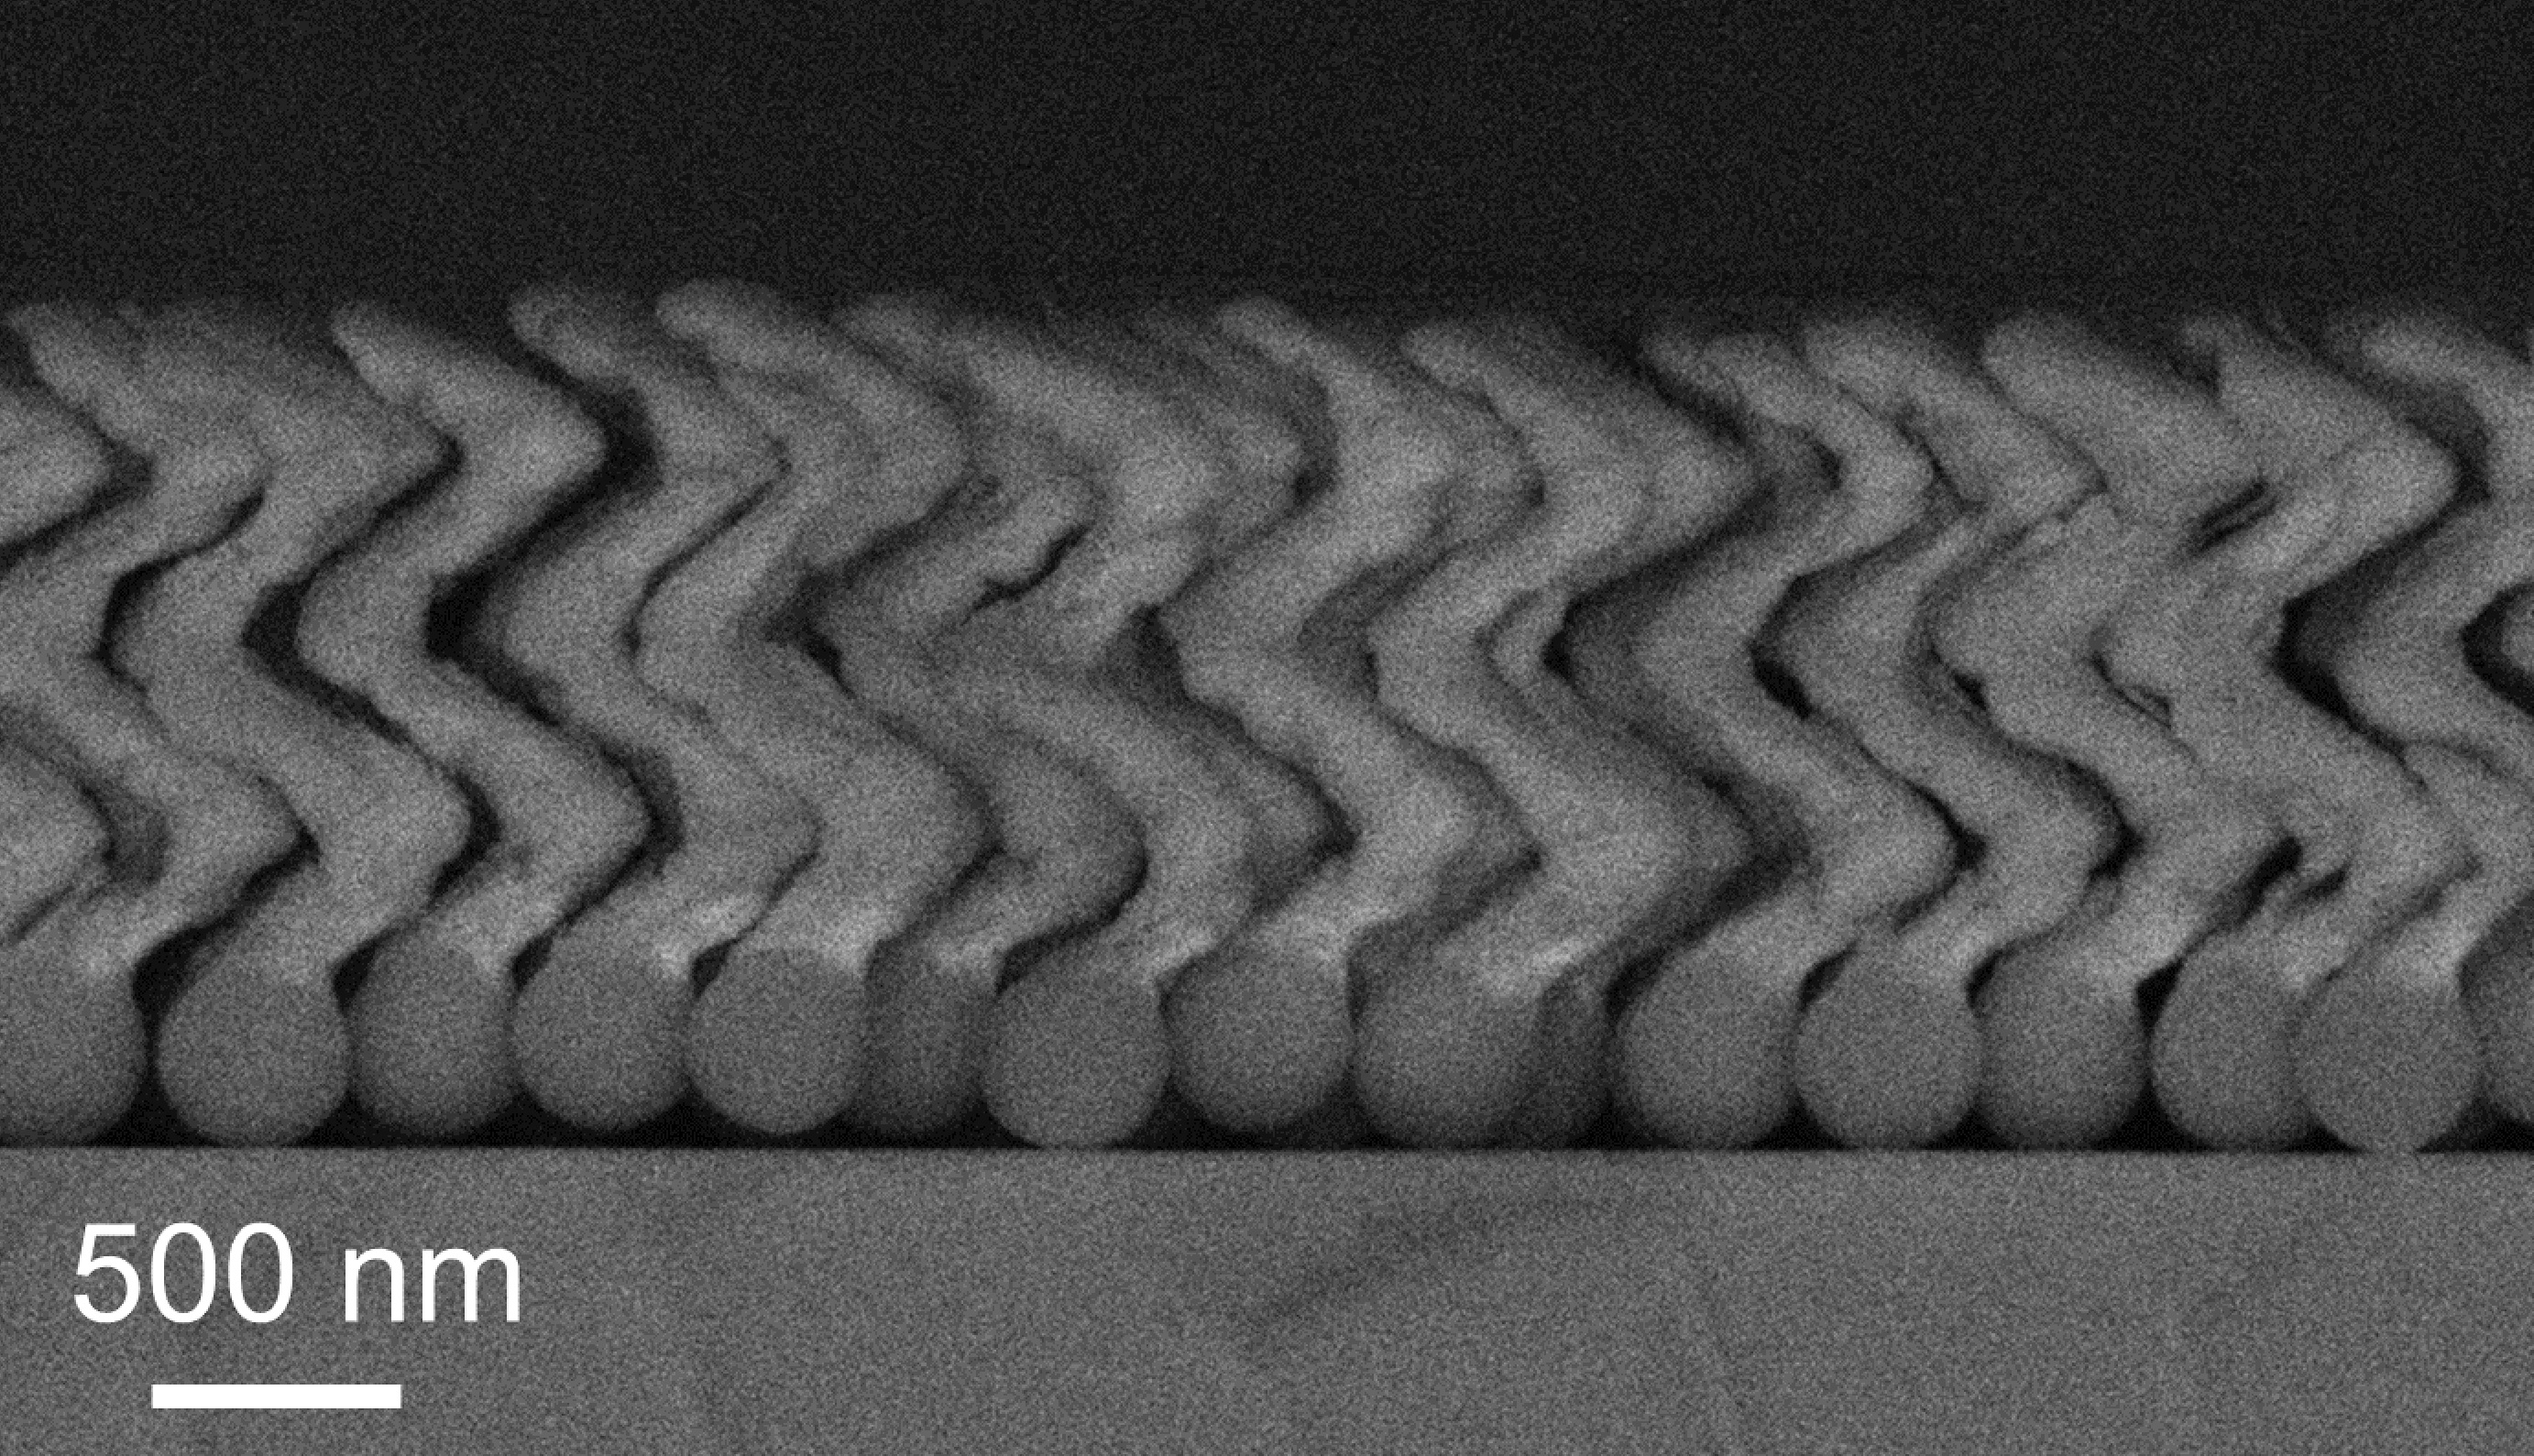 Black & white microscope image of the nanopropellers